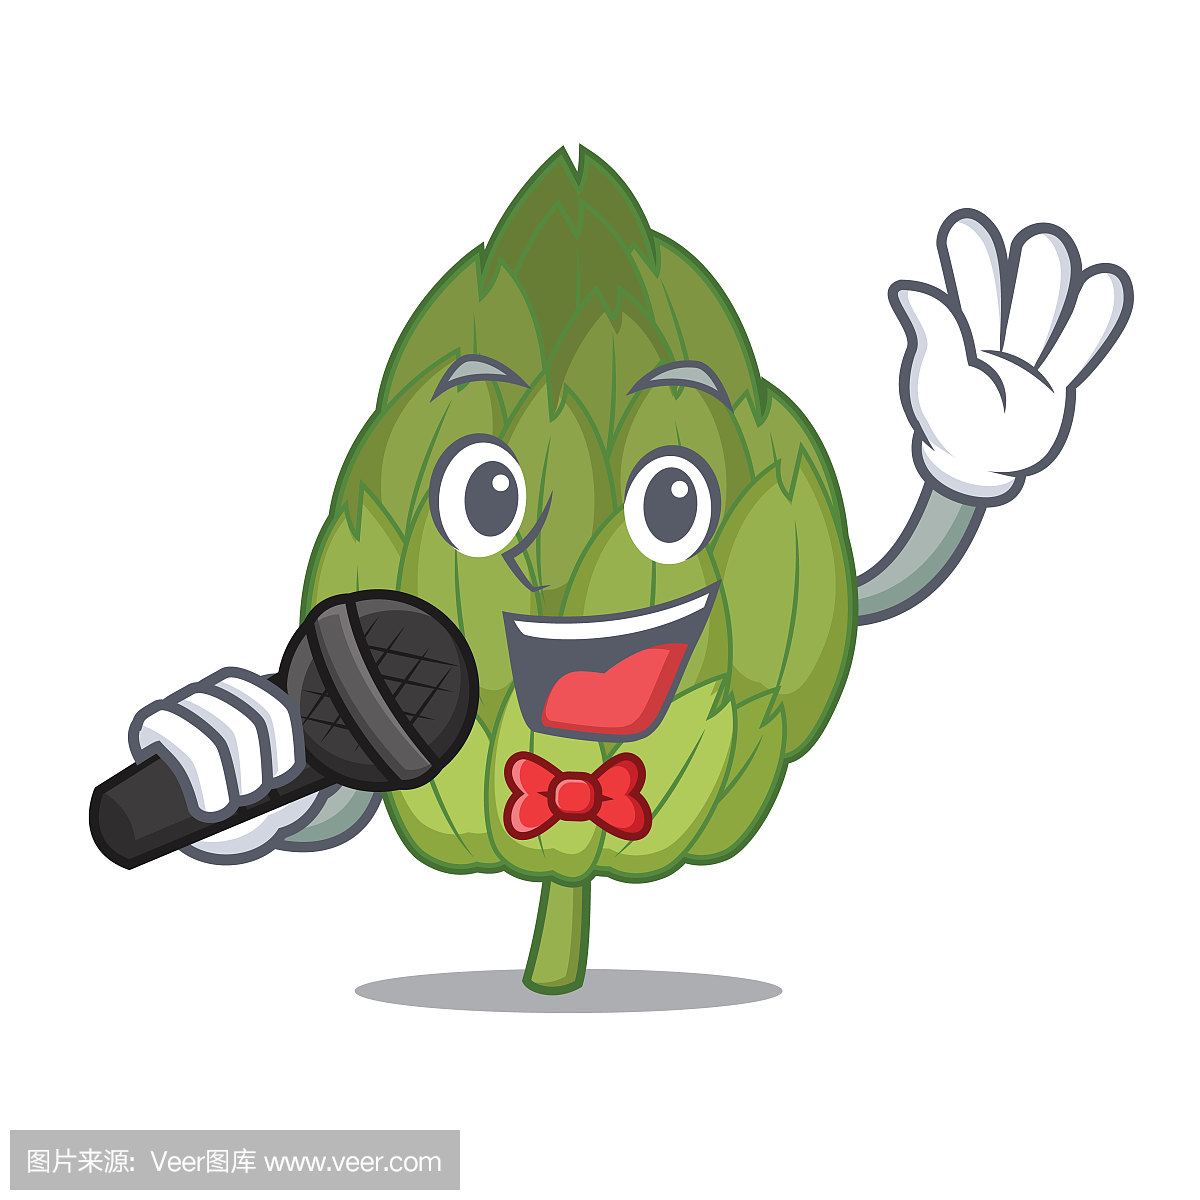 Singing artichoke mascot cartoon style